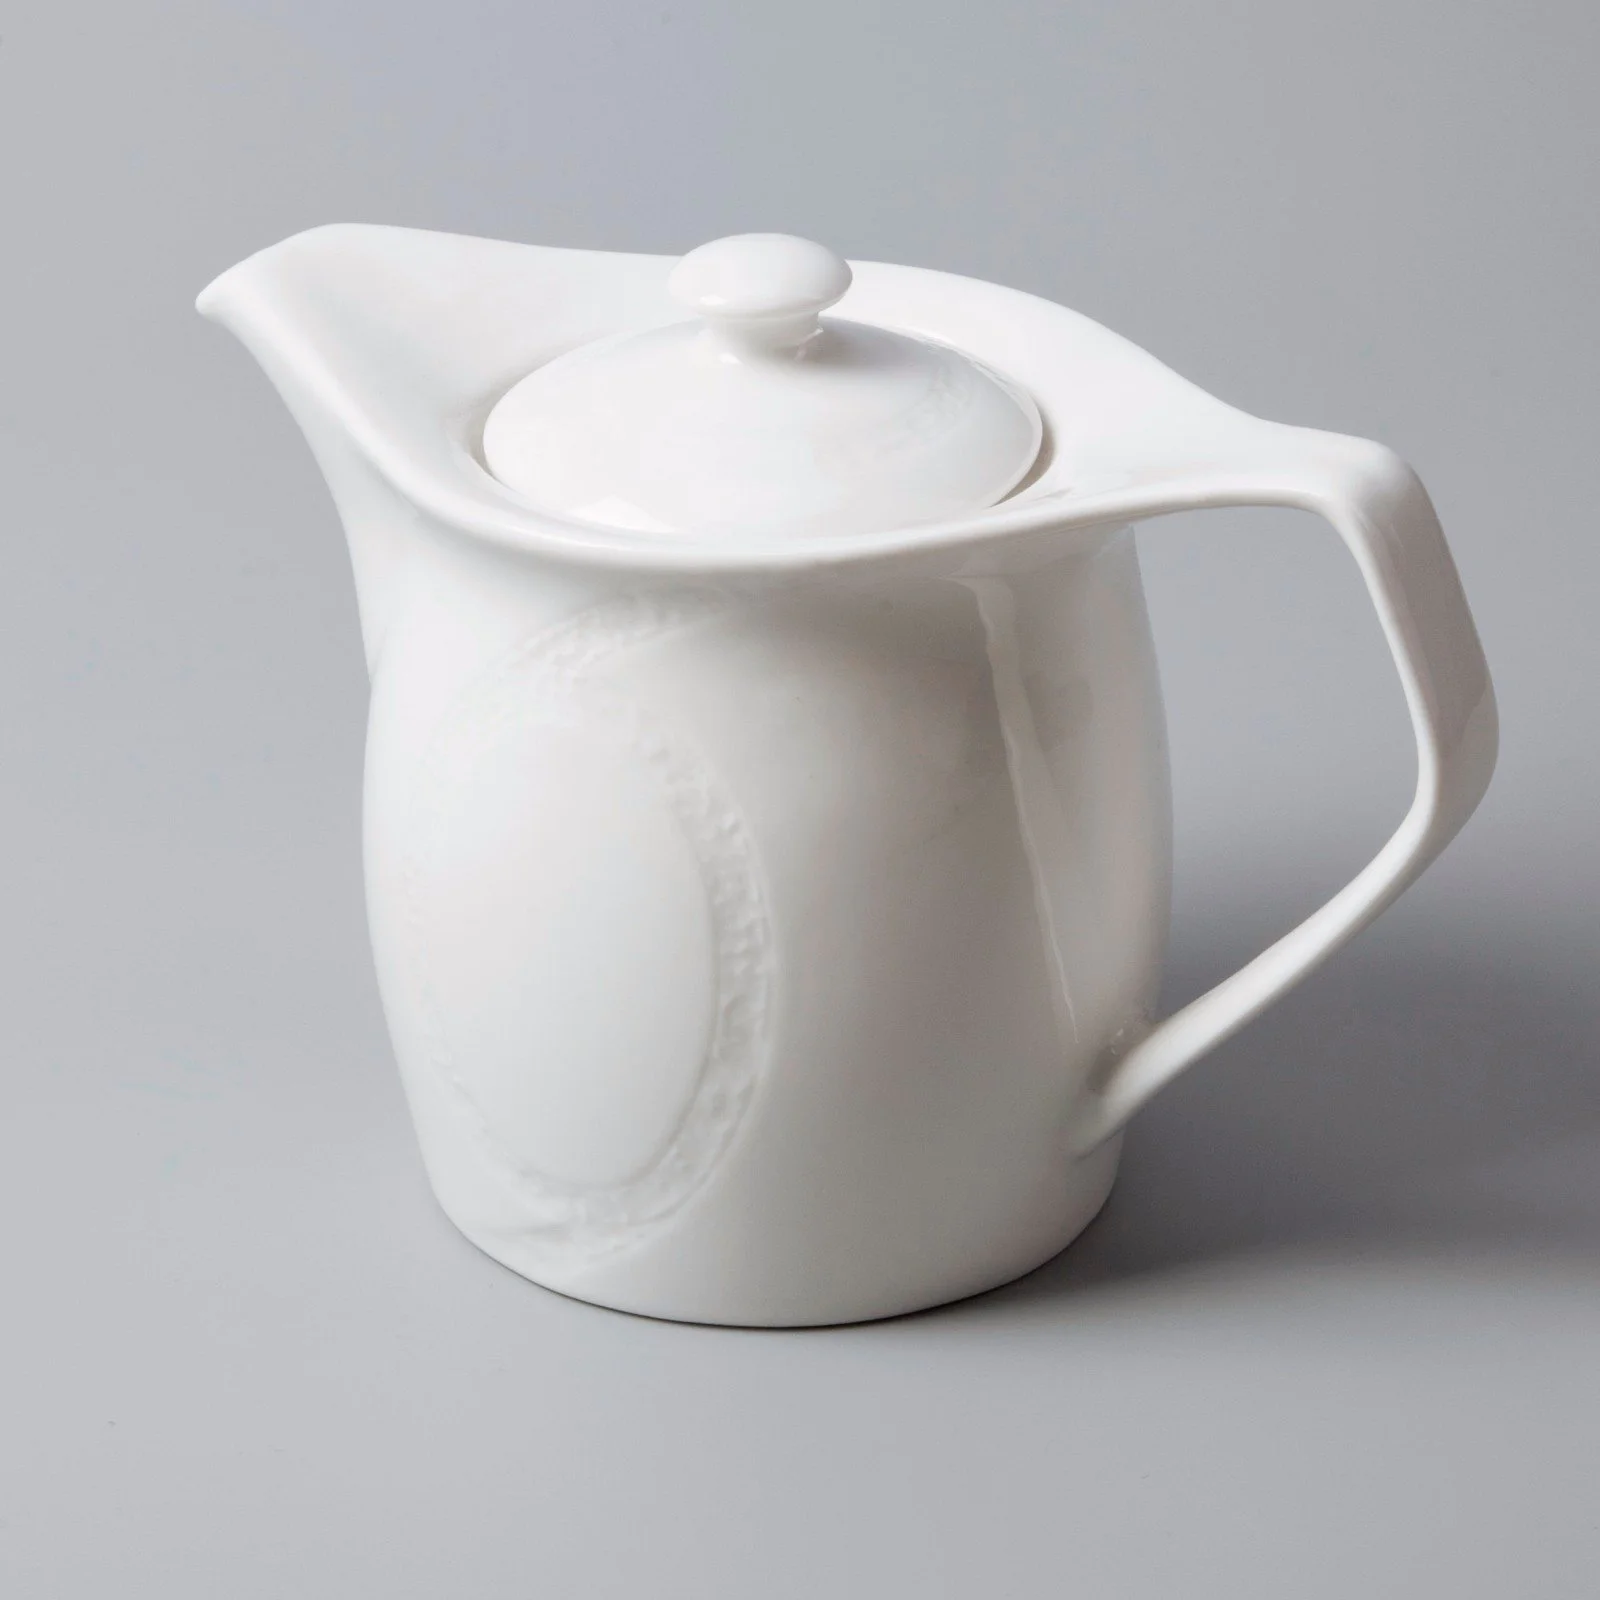 Latest best porcelain dinnerware in the world manufacturers for restaurant